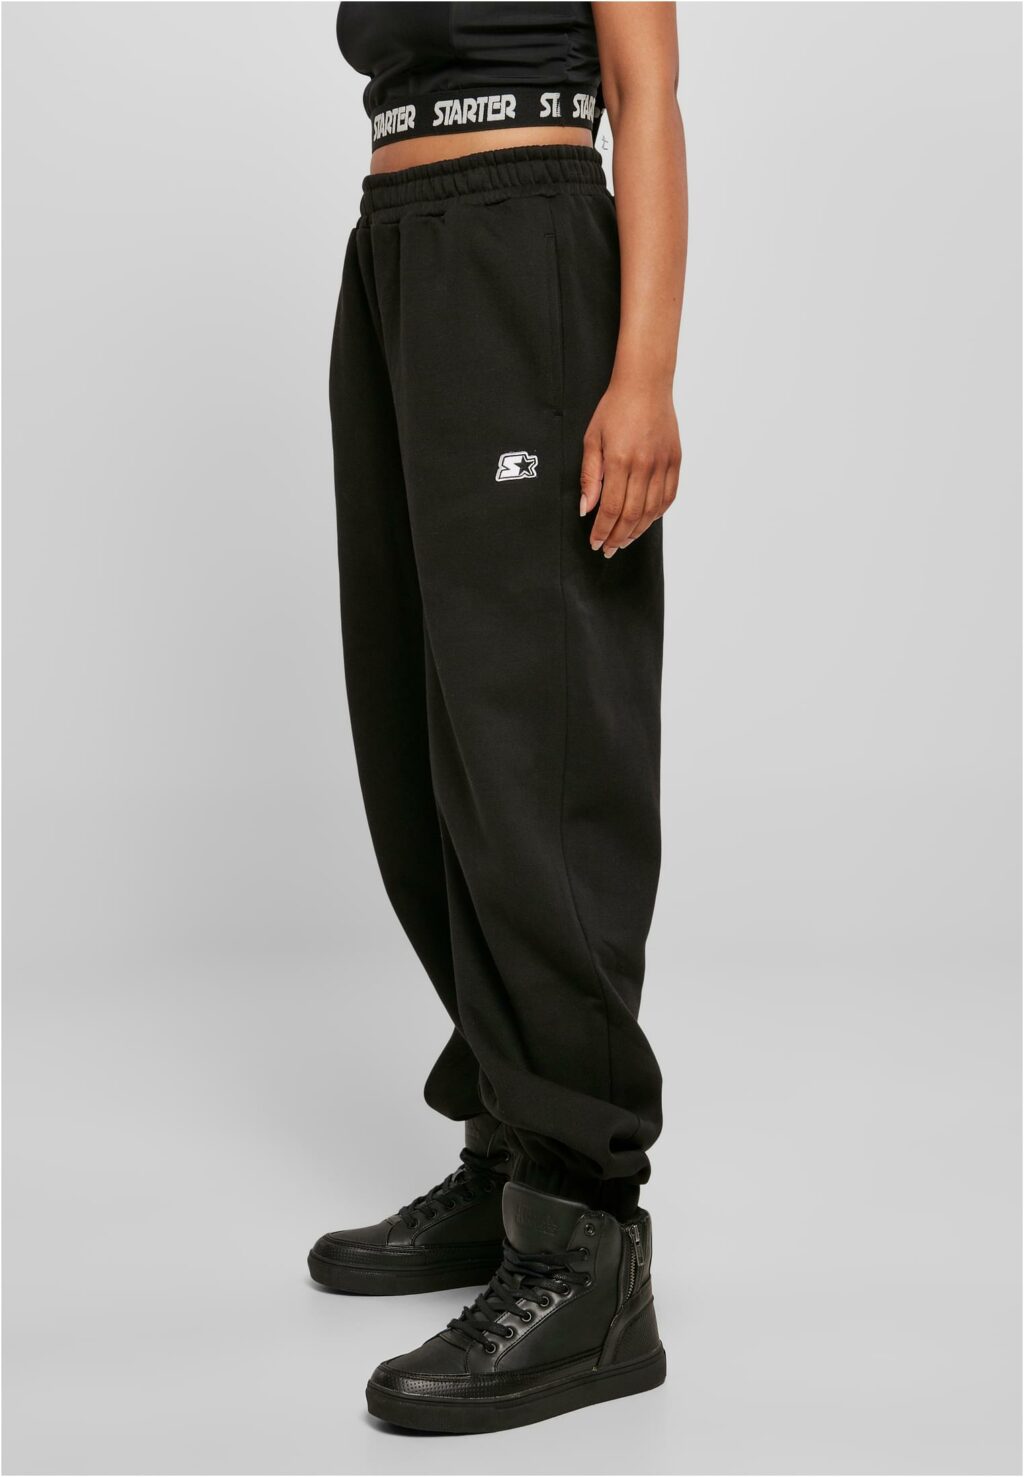 Ladies Starter Essential Sweat Pants black ST229